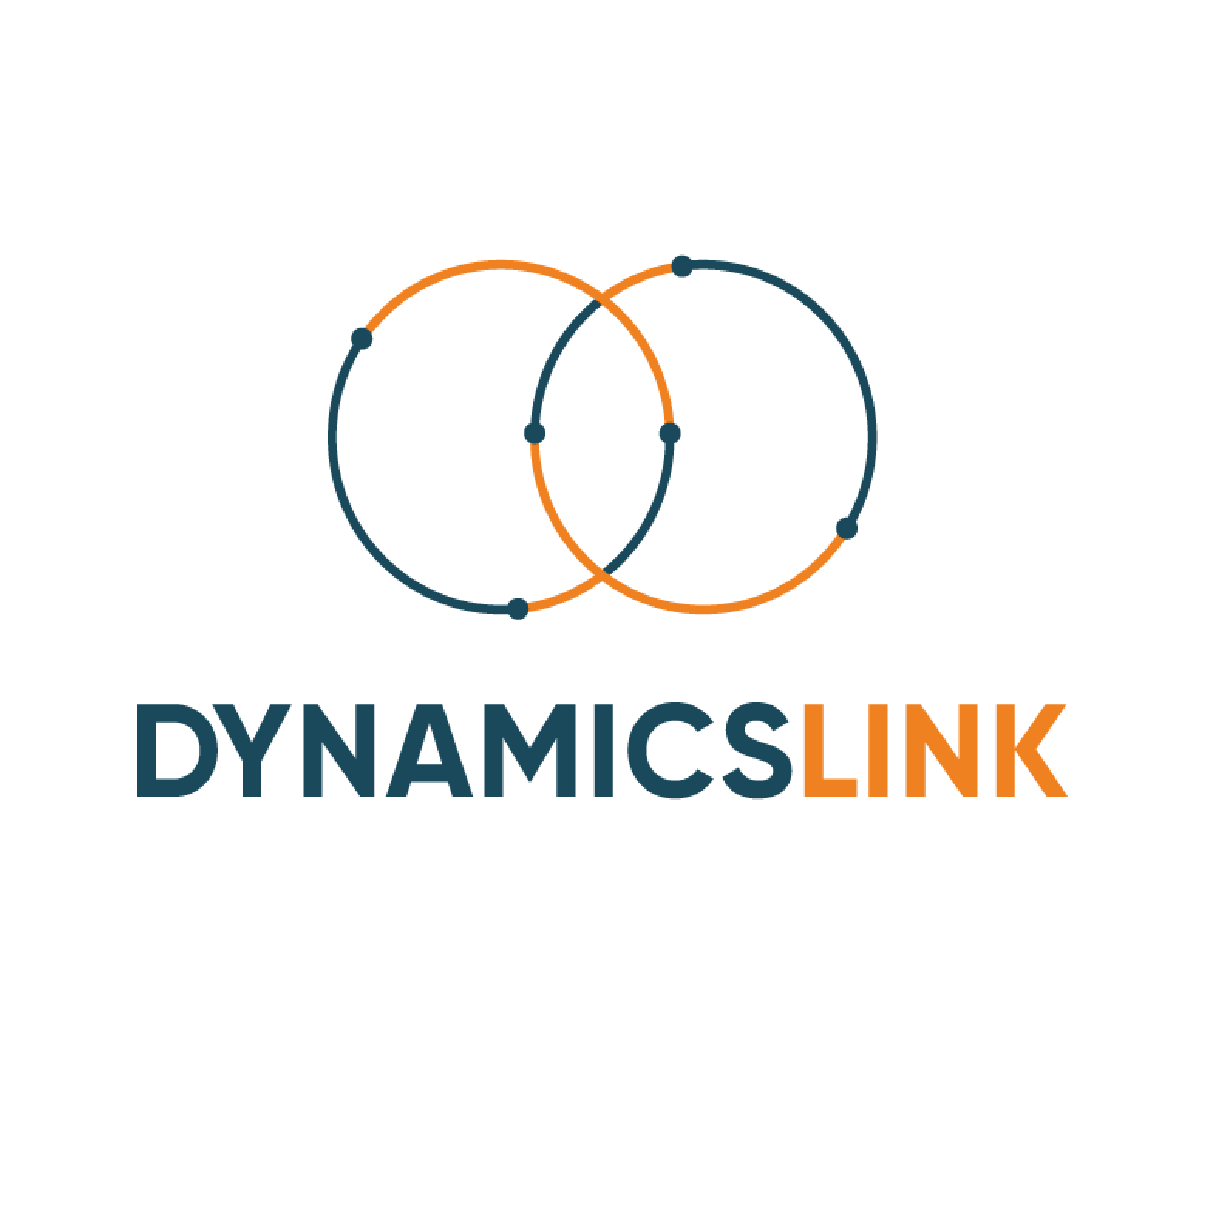 Dynamics link